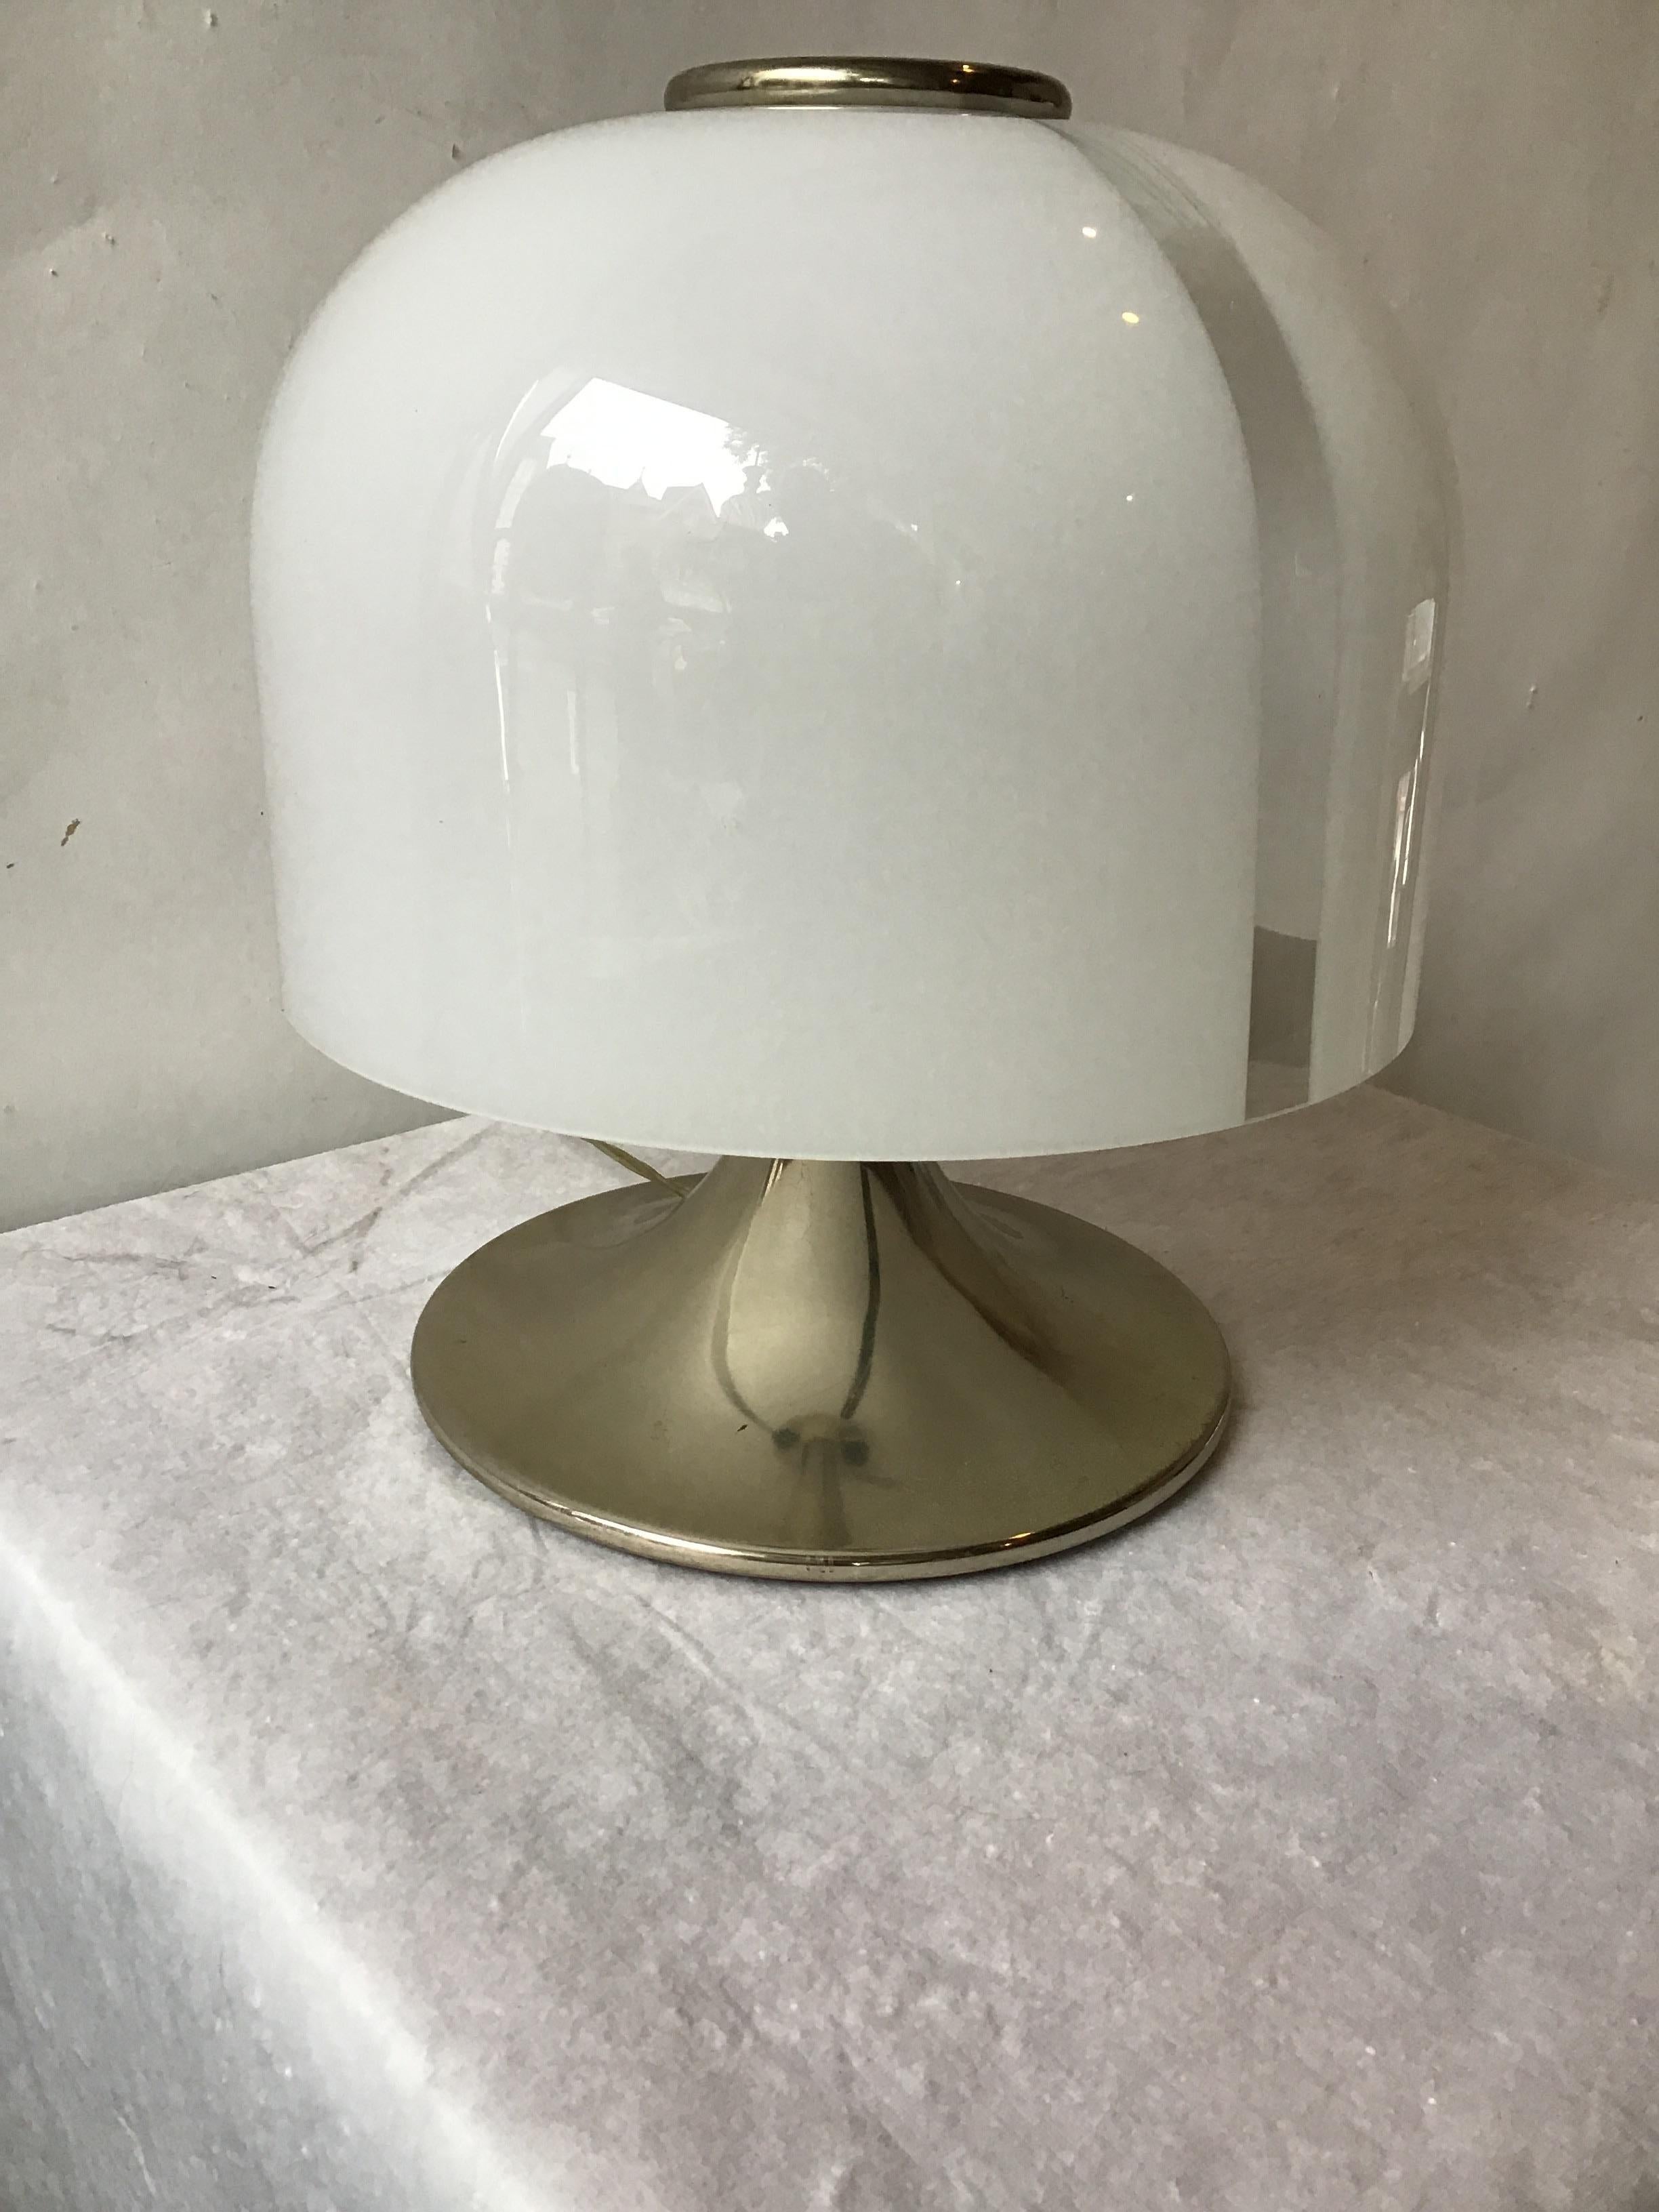 1970s glass mushroom shade lamp. Shade has clear glass stripes down the white shade.